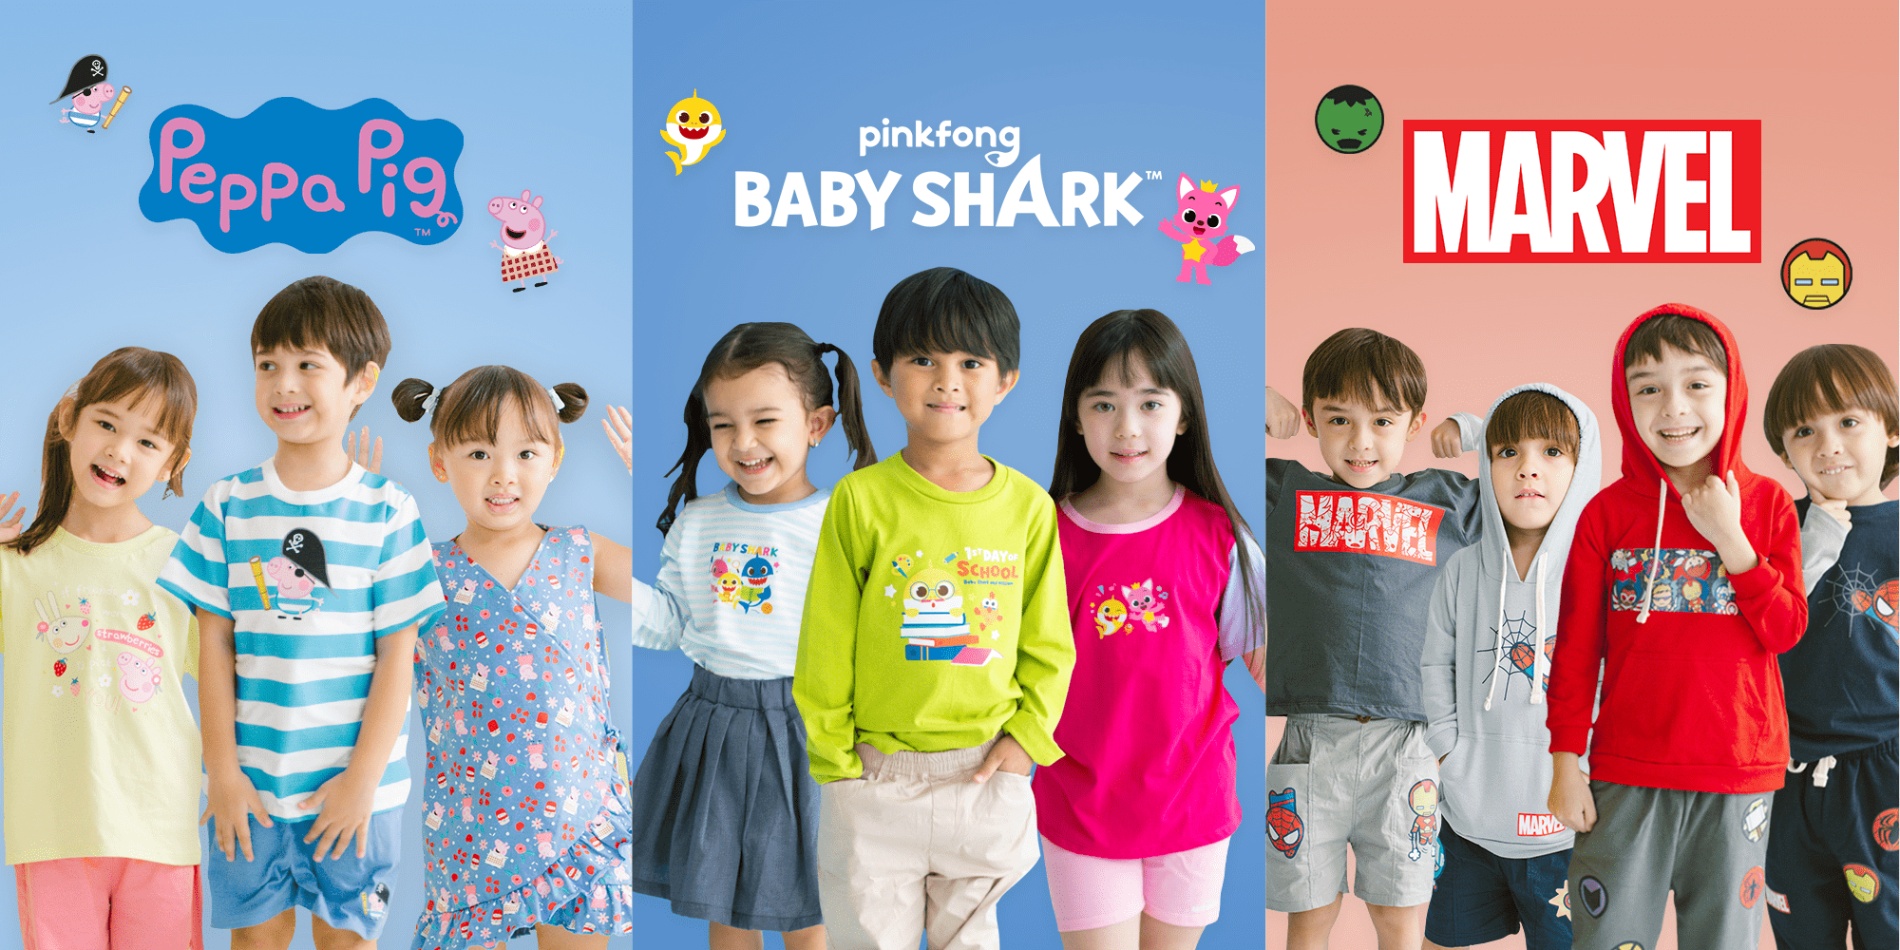 Promo Ardenleon X Pingfong Baby Shark Girls Panties 1.0 Diskon 23% di  Seller Aninda Store ID - Petojo Utara, Kota Jakarta Pusat